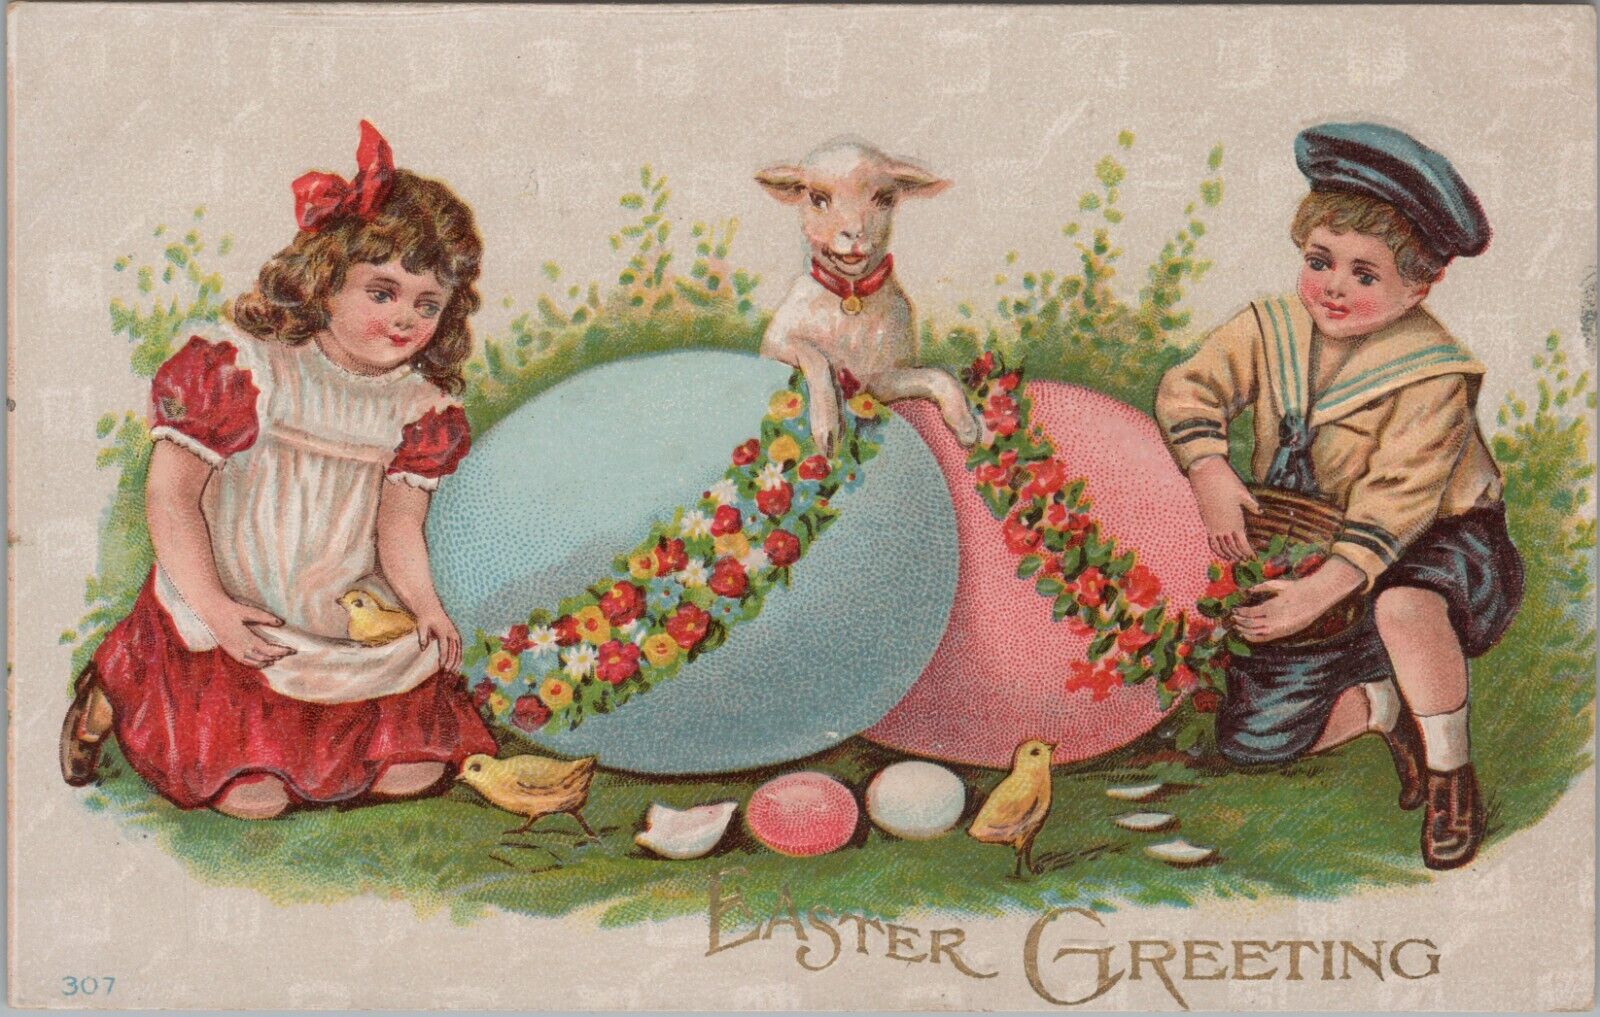 Easter Greeting Chicks Eggs Floral Wreath Lamb Kids 1910 embossed postcard G707